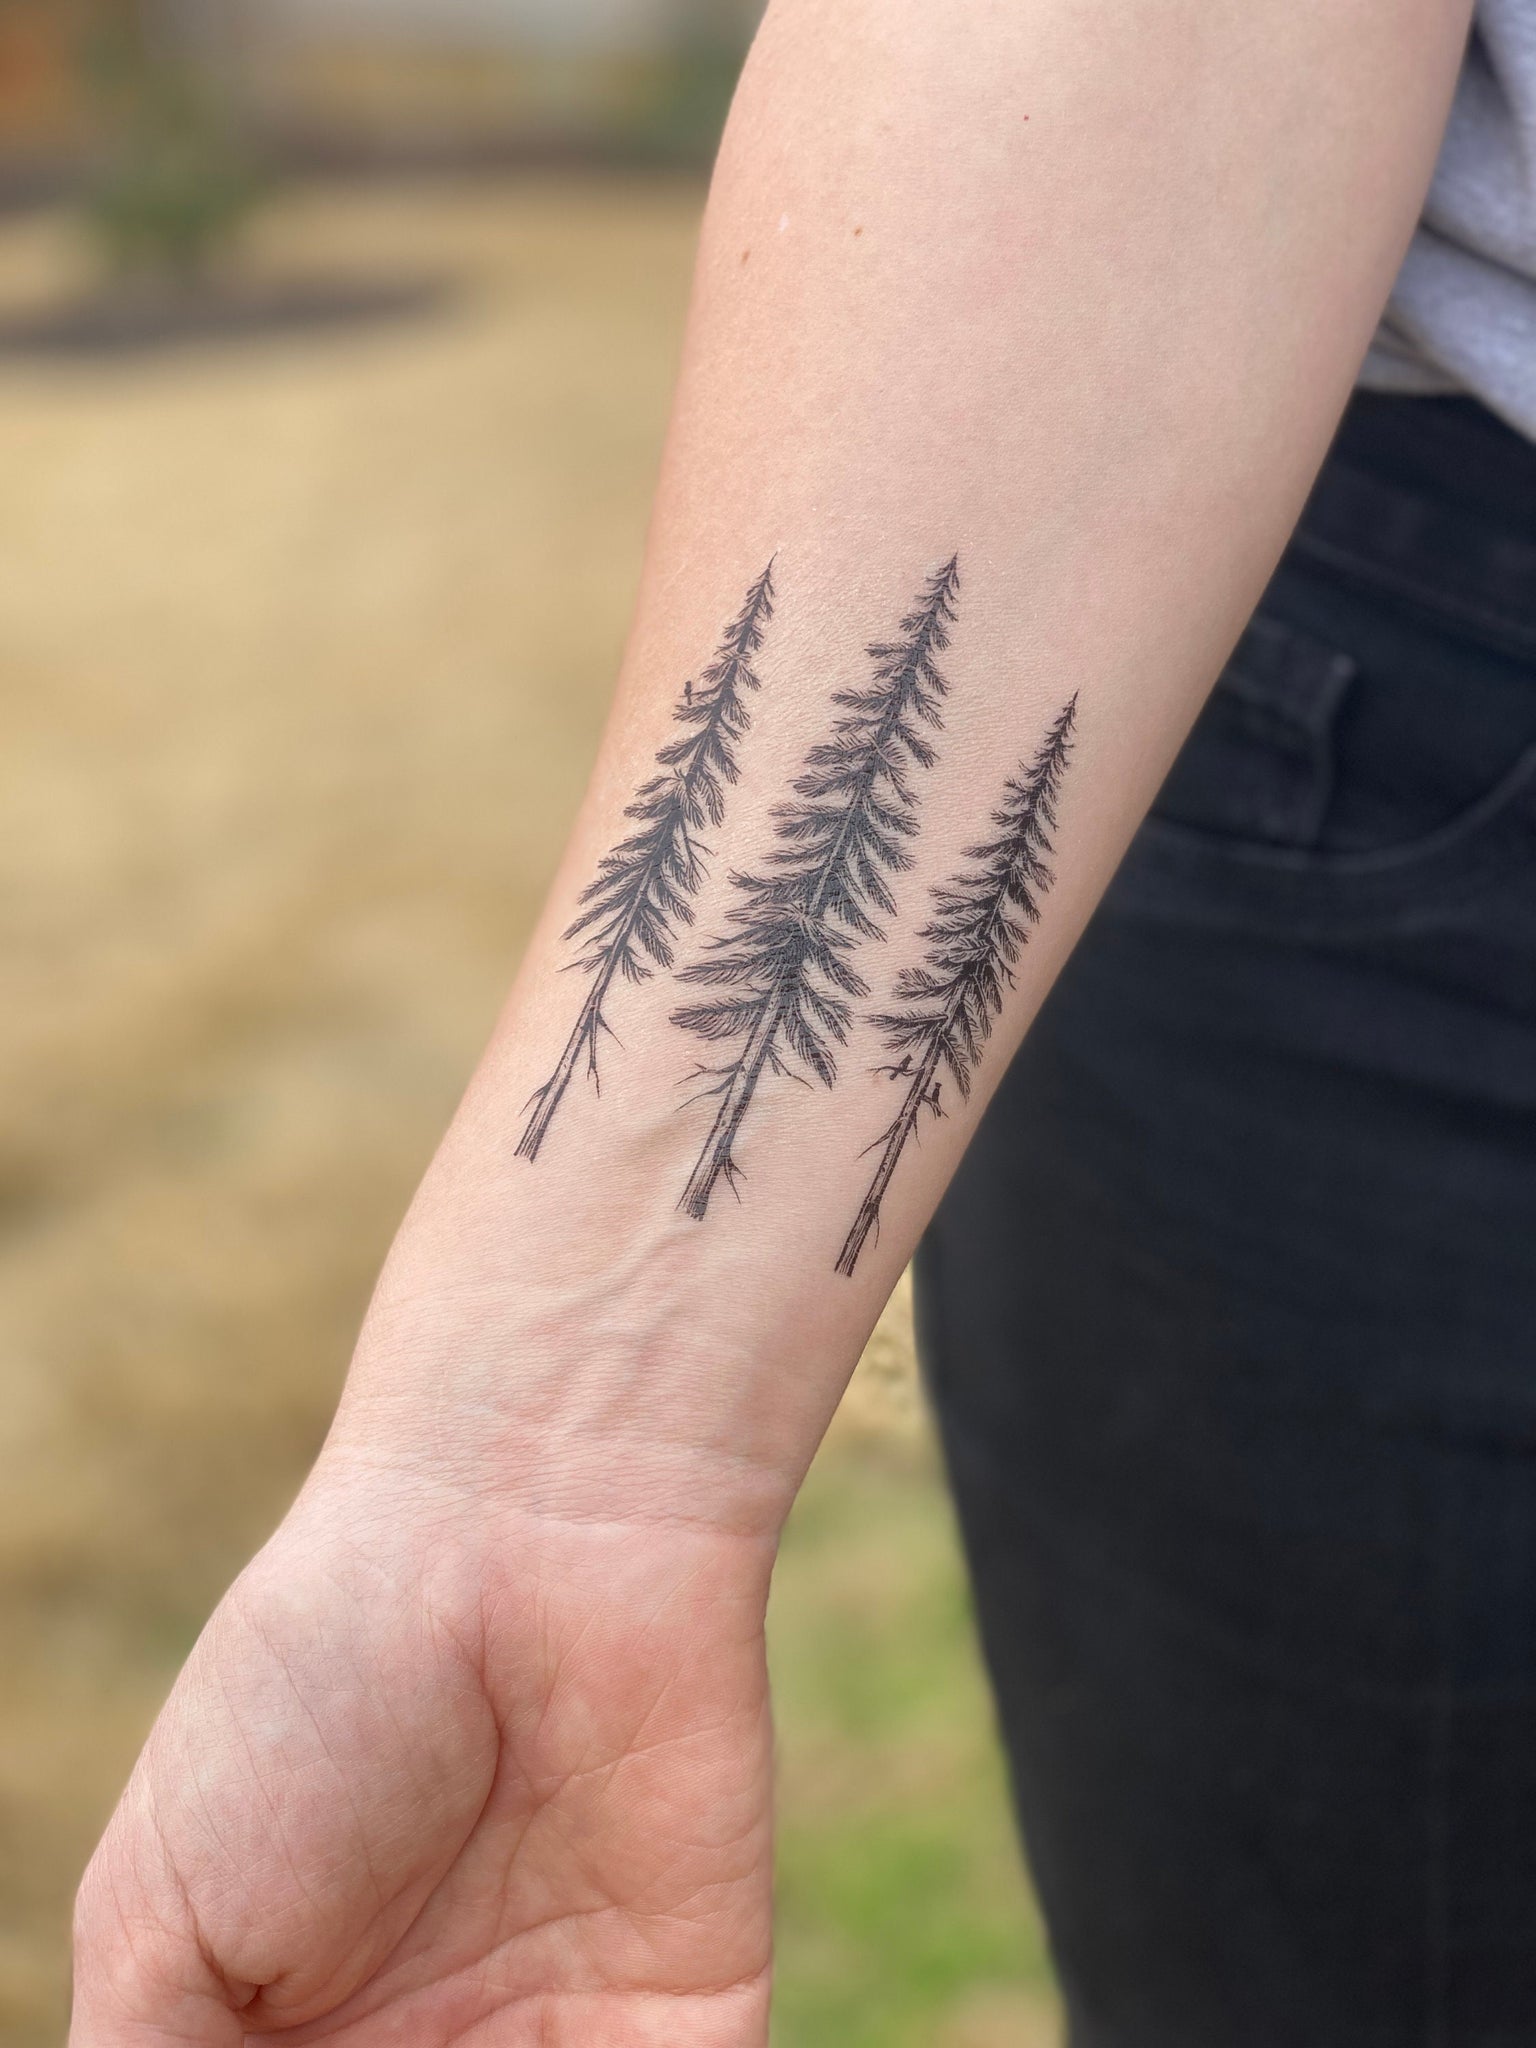 Tatuajes PEQUEÑOS y ORIGINALES. Descubre las ideas más bonitas para tu  próximo tatuaje. Los mini tattoos so… | Tree tattoo designs, Tree line  tattoo, Nature tattoos